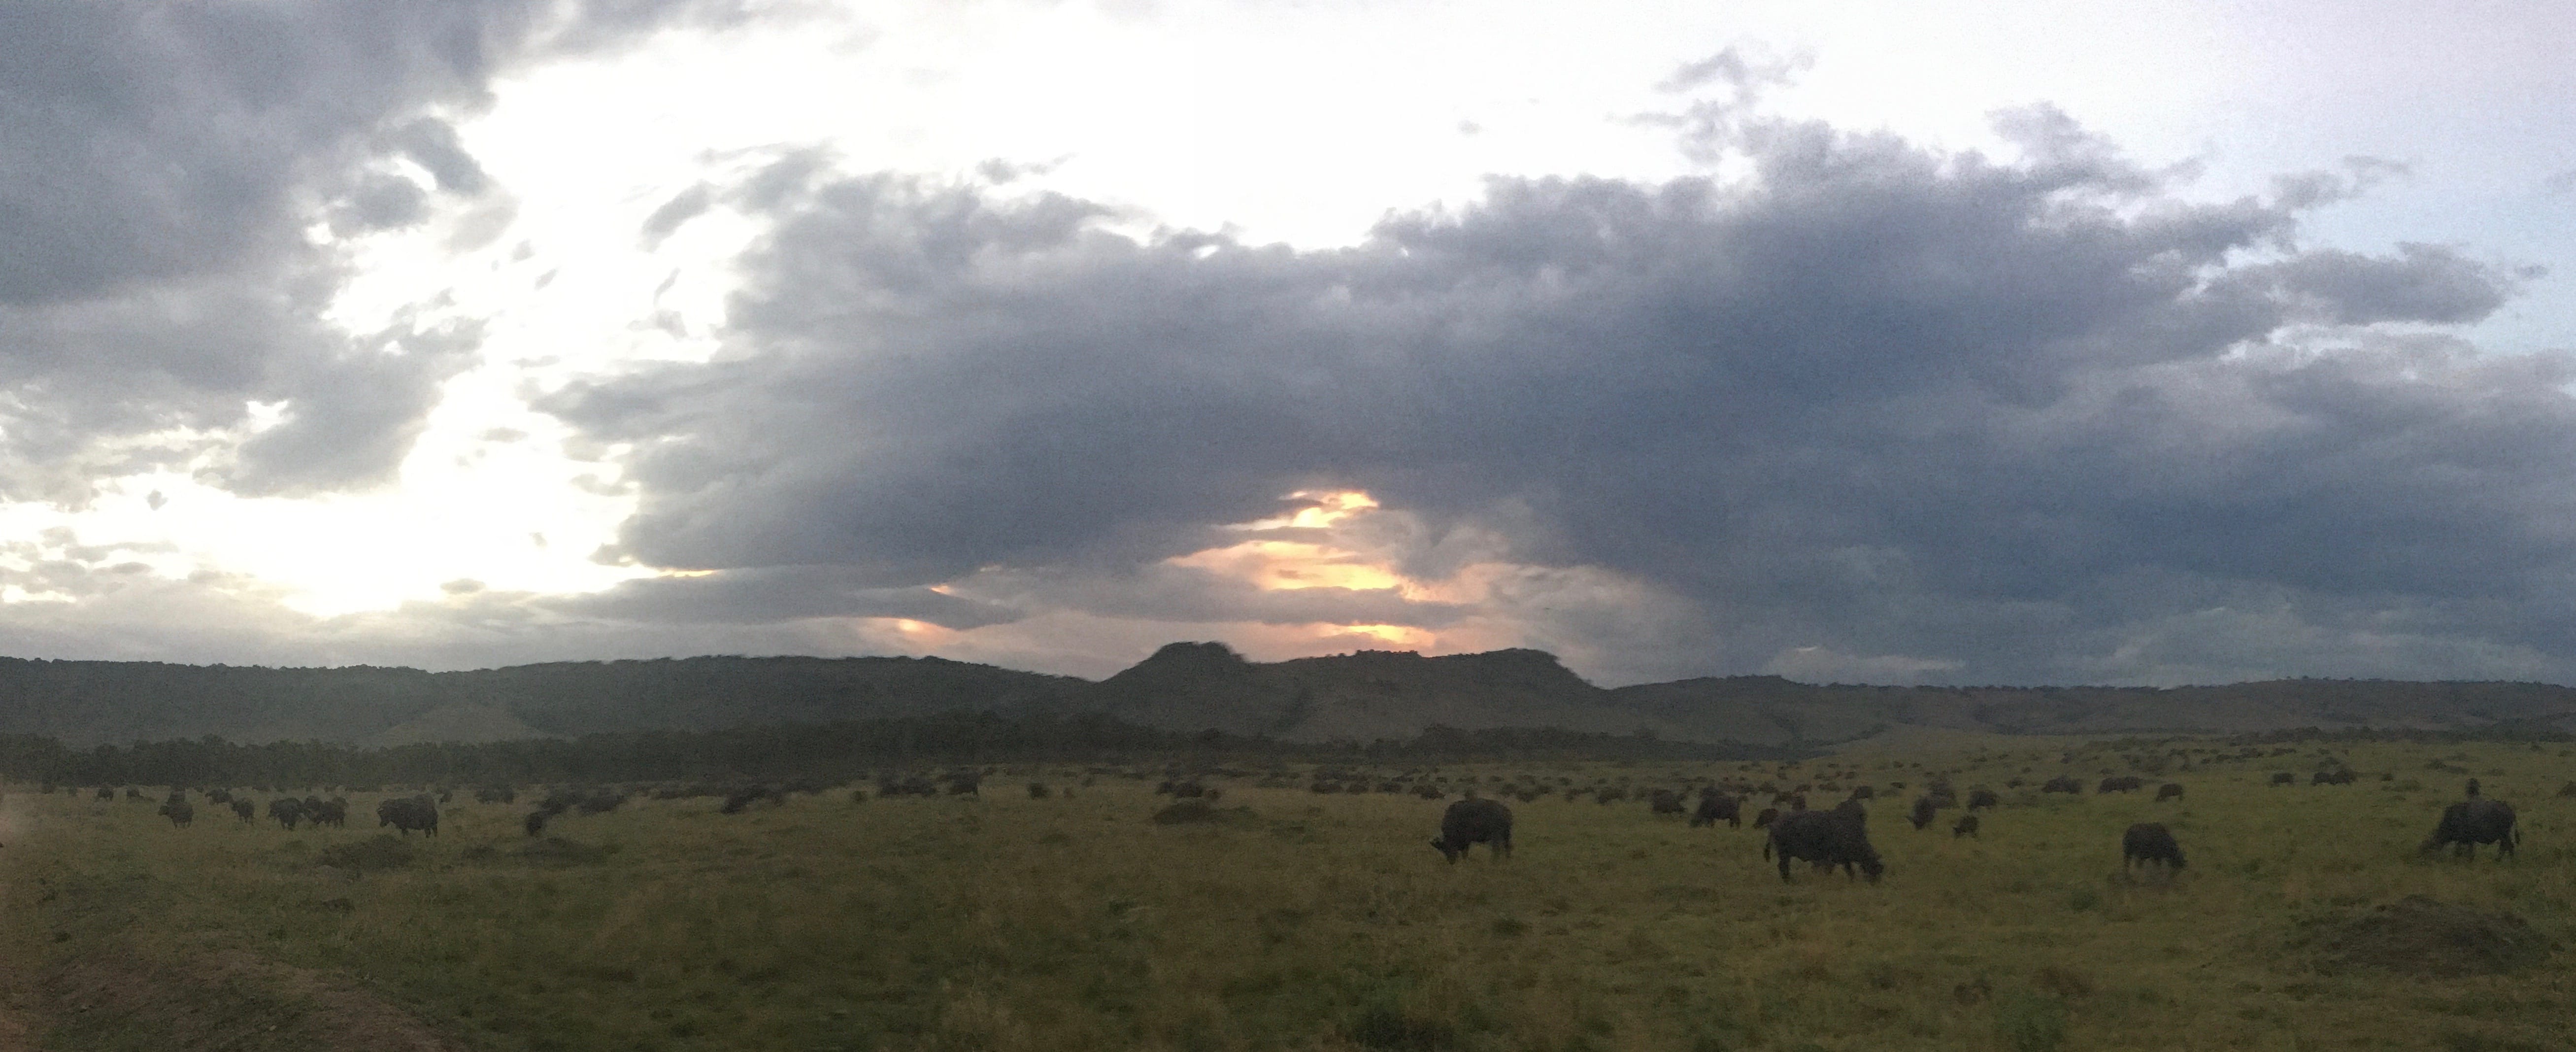 Safari Lodge Review: Angama Mara in the Maasai Mara, Kenya